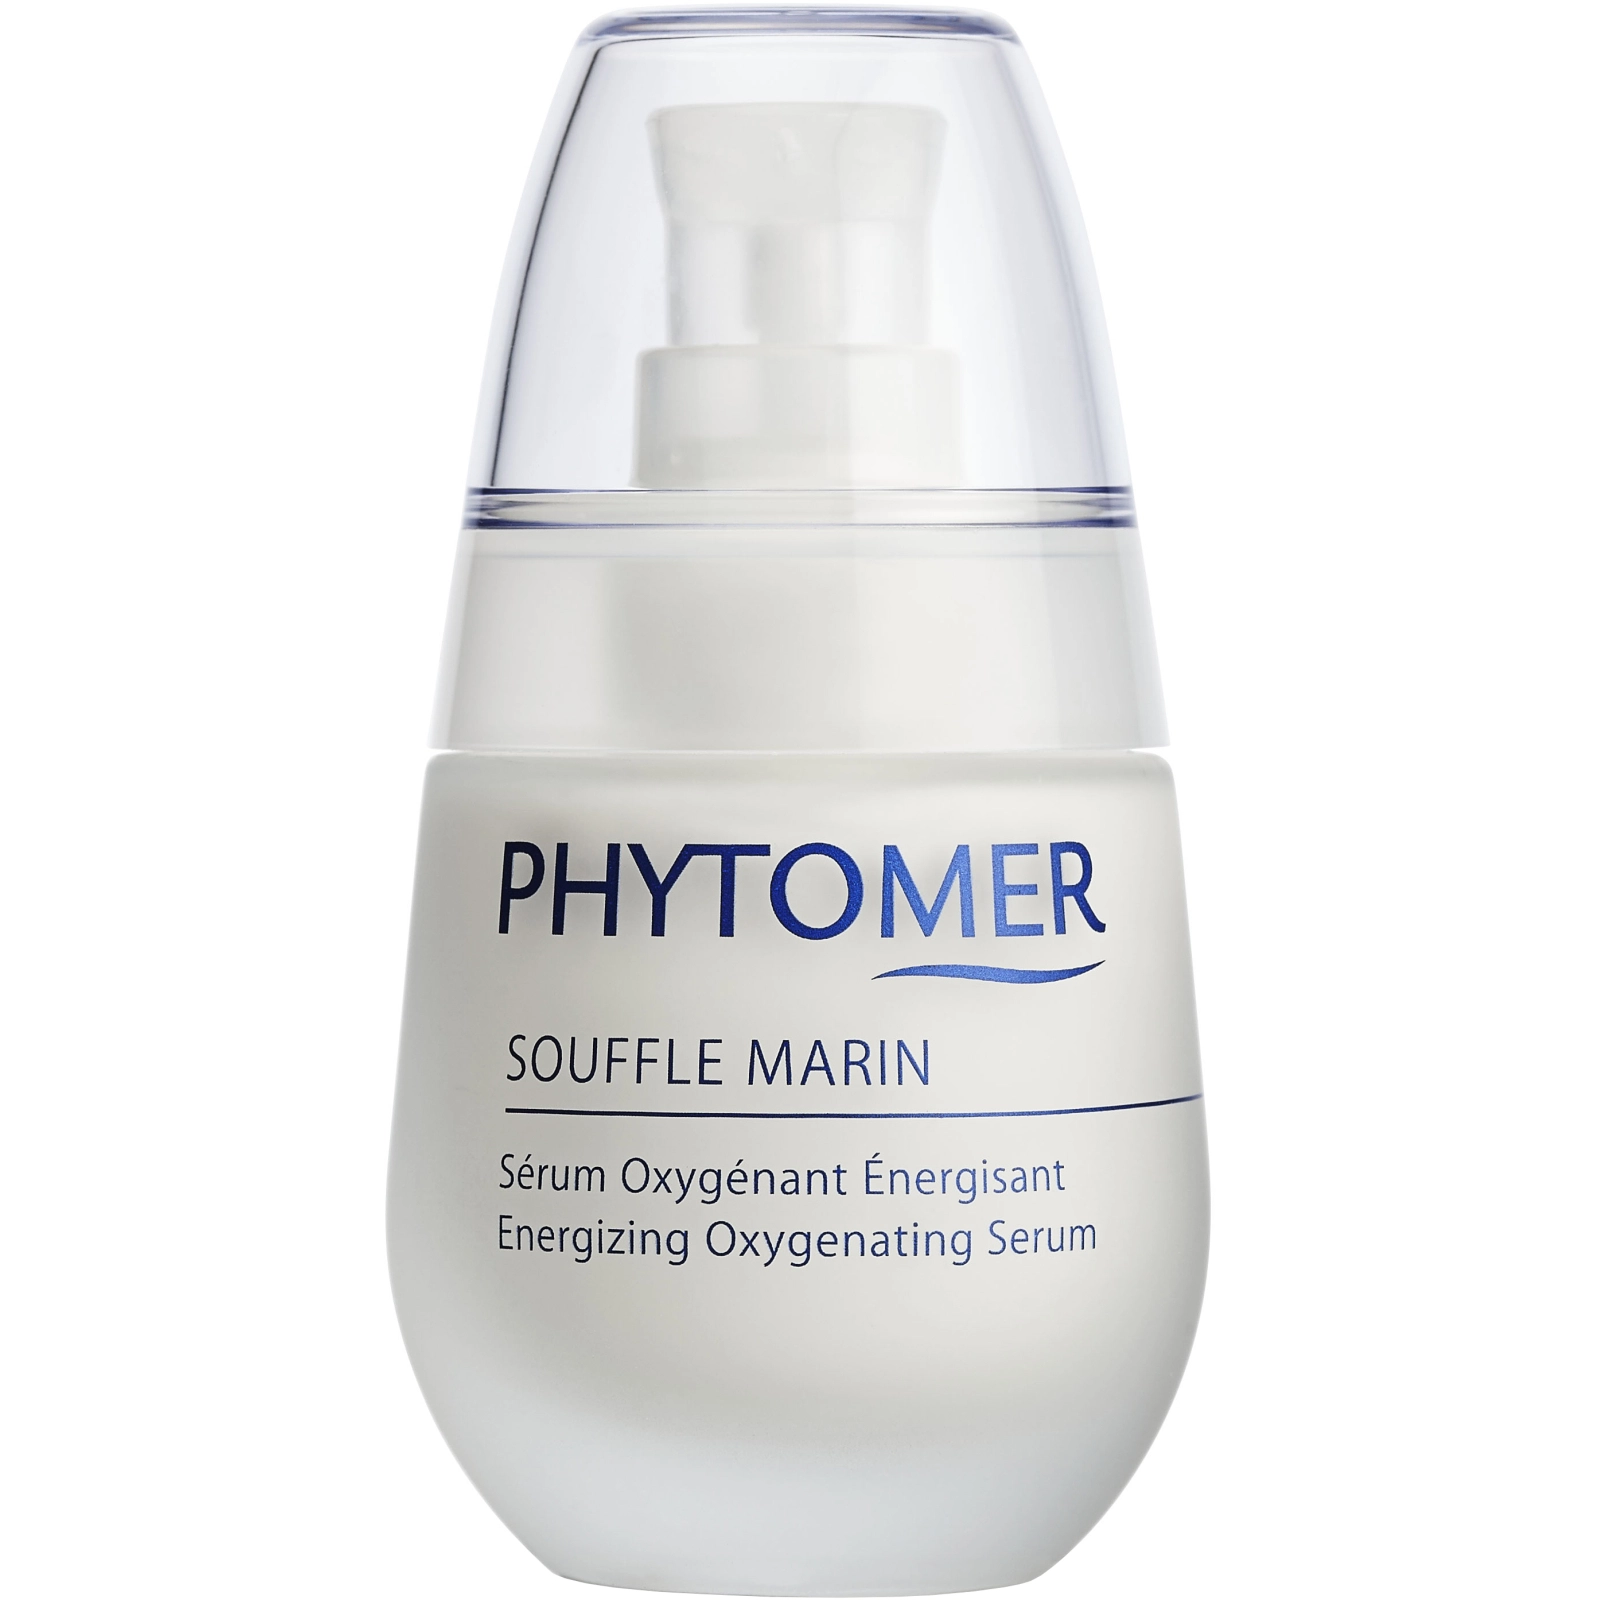 Сыворотка оксигенирующая - Phytomer Souffle Marin Energizing Oxygenating Serum, 30 мл - фото N2